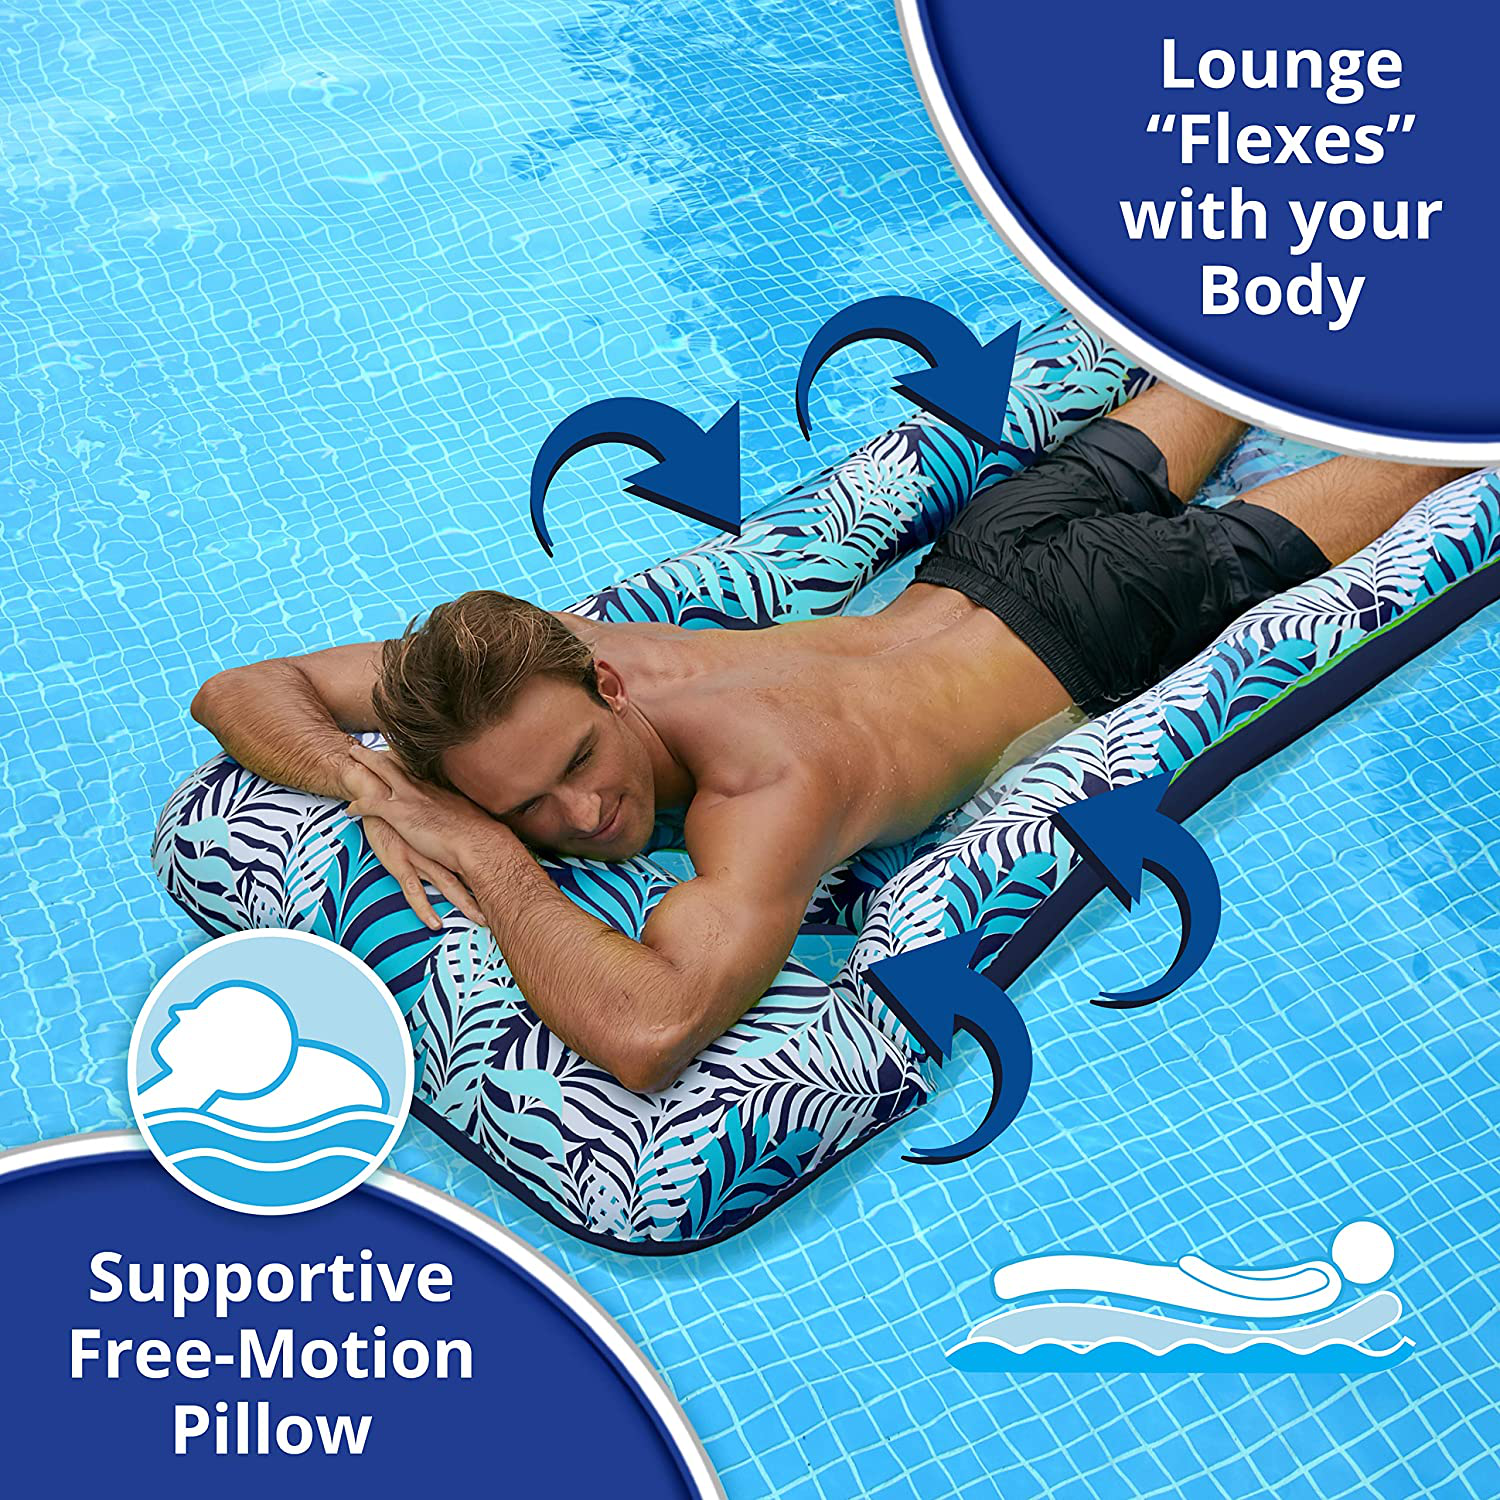 AQUA Zero Gravity Pool Chair Lounge, Inflatable Pool Chair, Adult Pool Float, Heavy Duty, Blue Fern